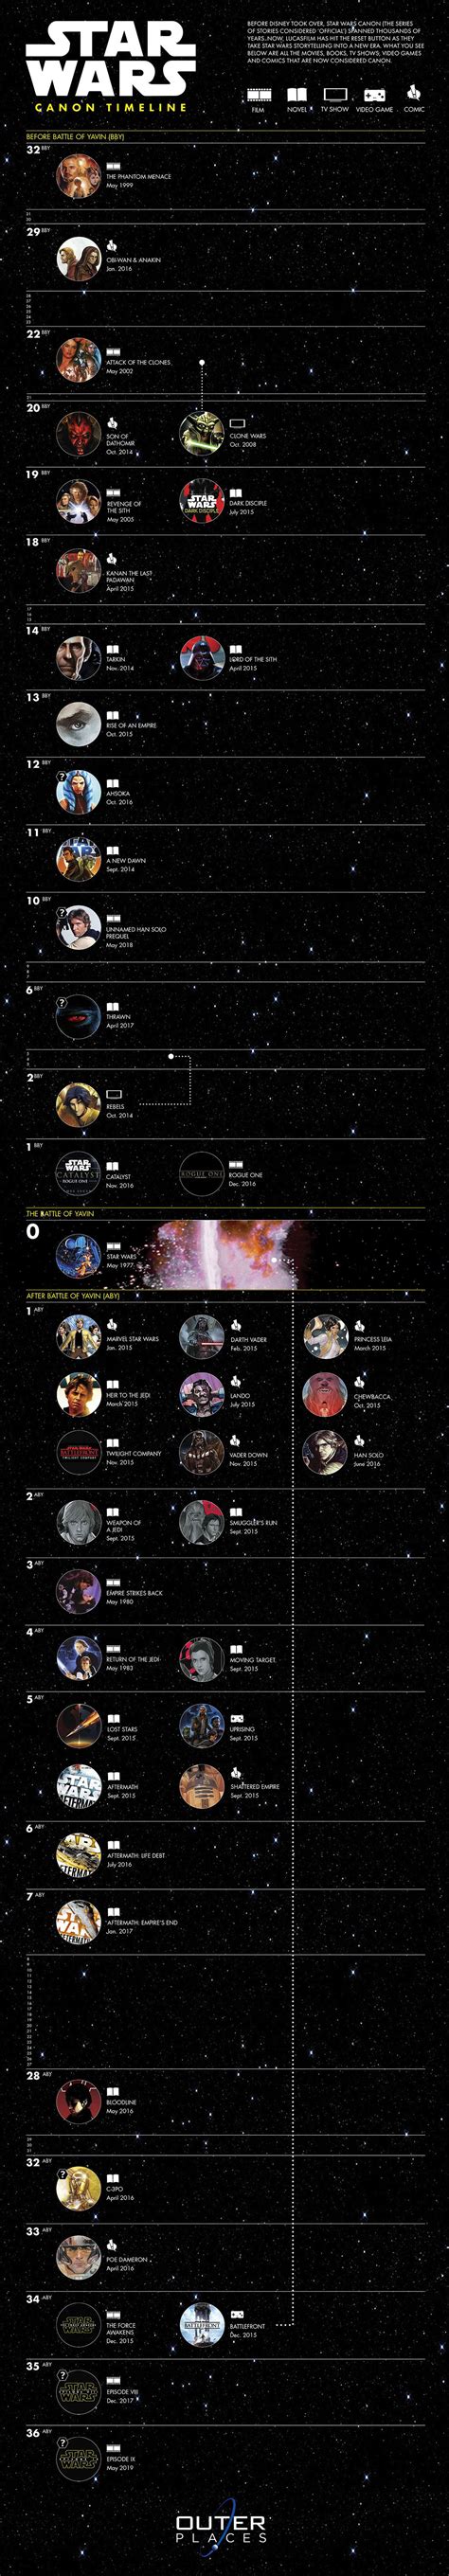 Star Wars Canon Timeline Infographic Star Wars Timeline Star Wars